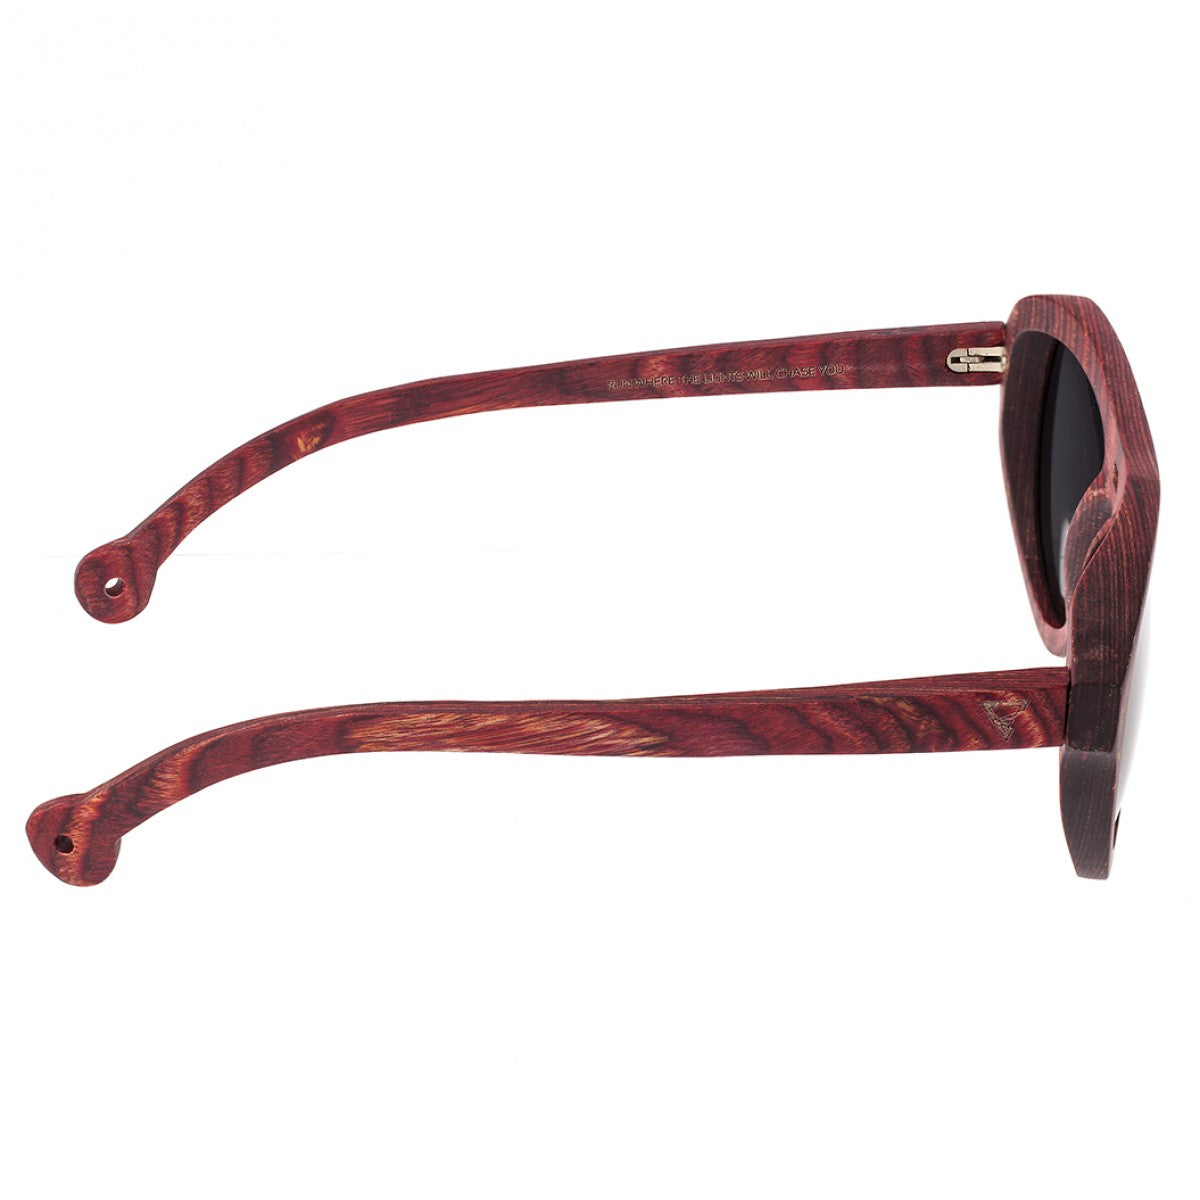 Spectrum Keaulana Wood Polarized Sunglasses - Cherry/Black - SSGS112BK